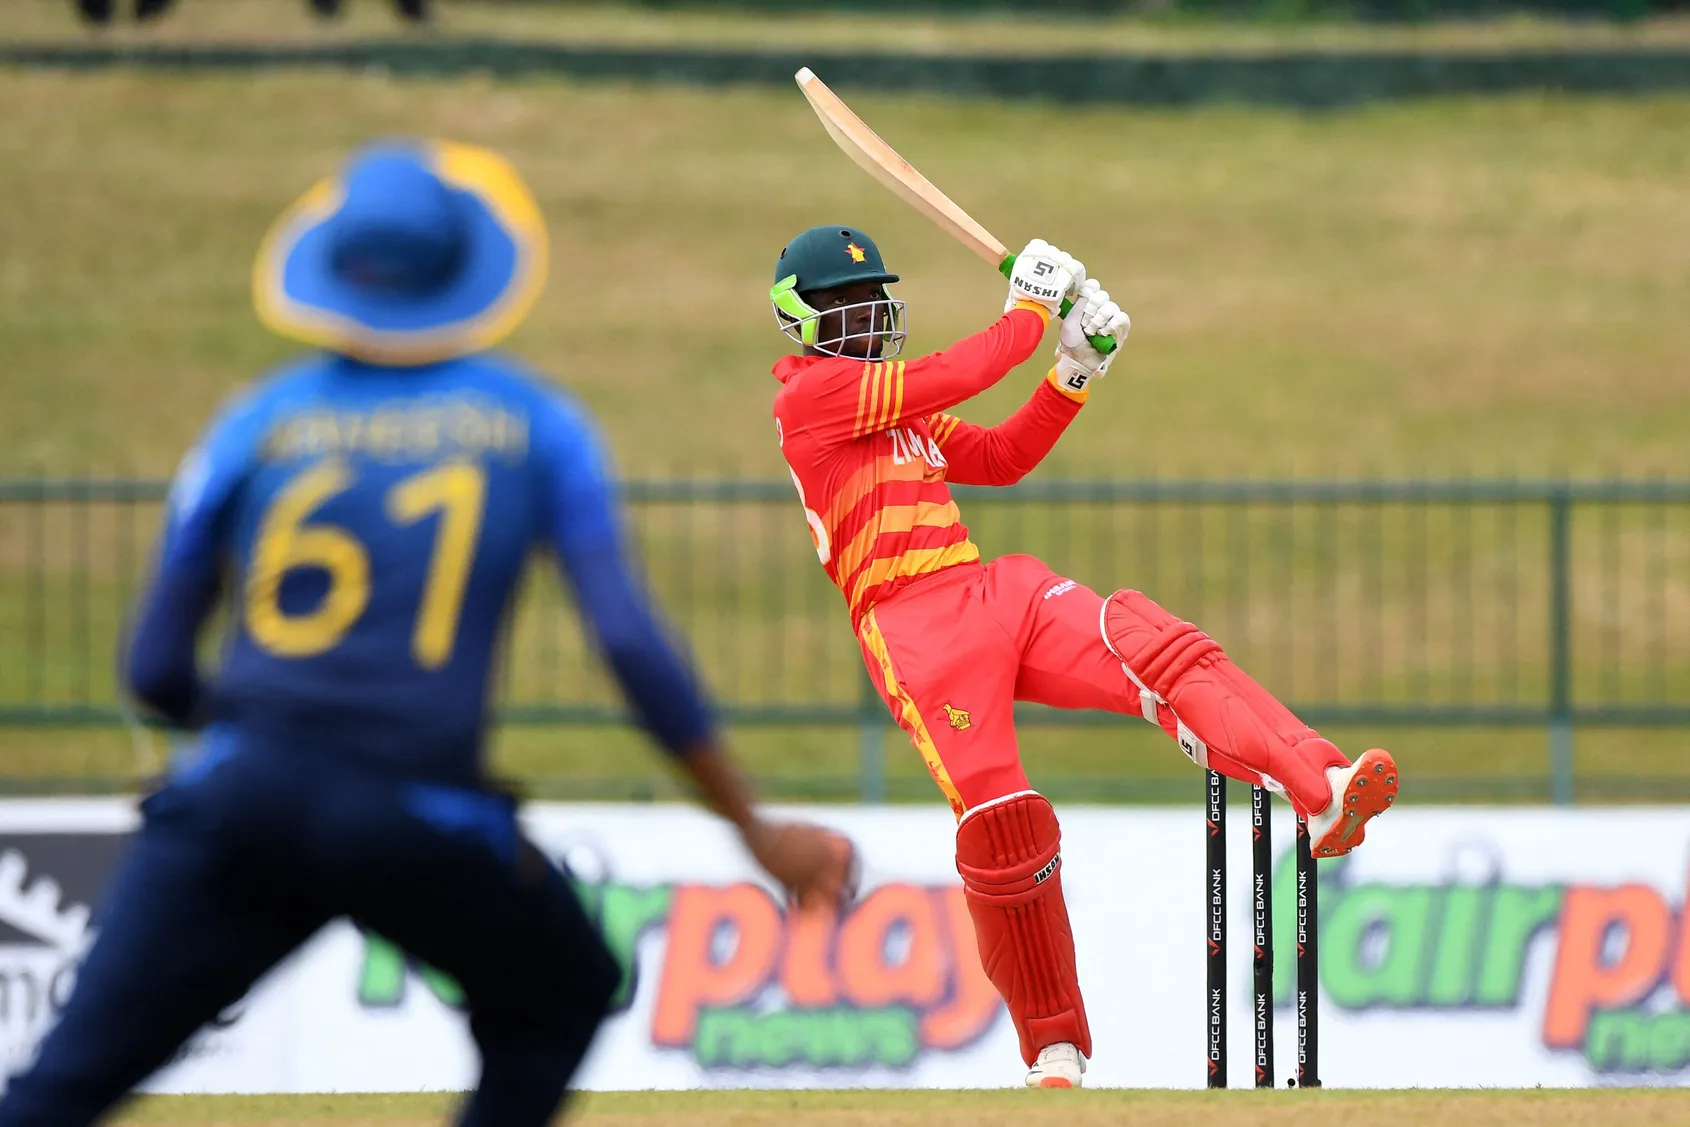 ICC: Sri Lanka v Zimbabwe warm-up match rescheduled